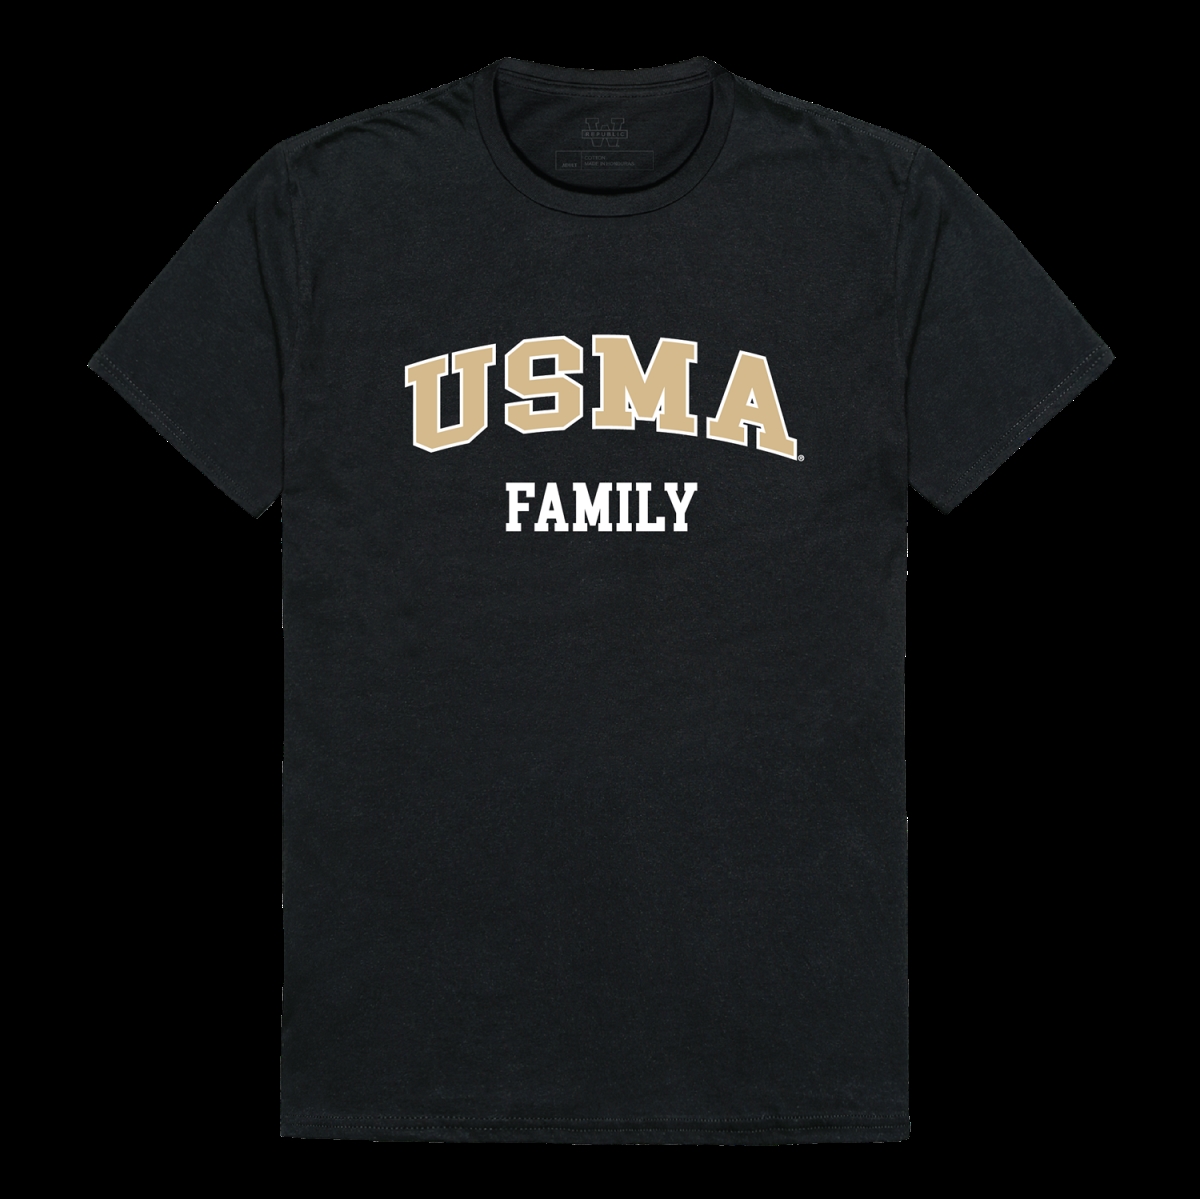 W Republic 571-174-BLK-04 Army War College Black Nights Family T-Shirt&#44; Black - Extra Large